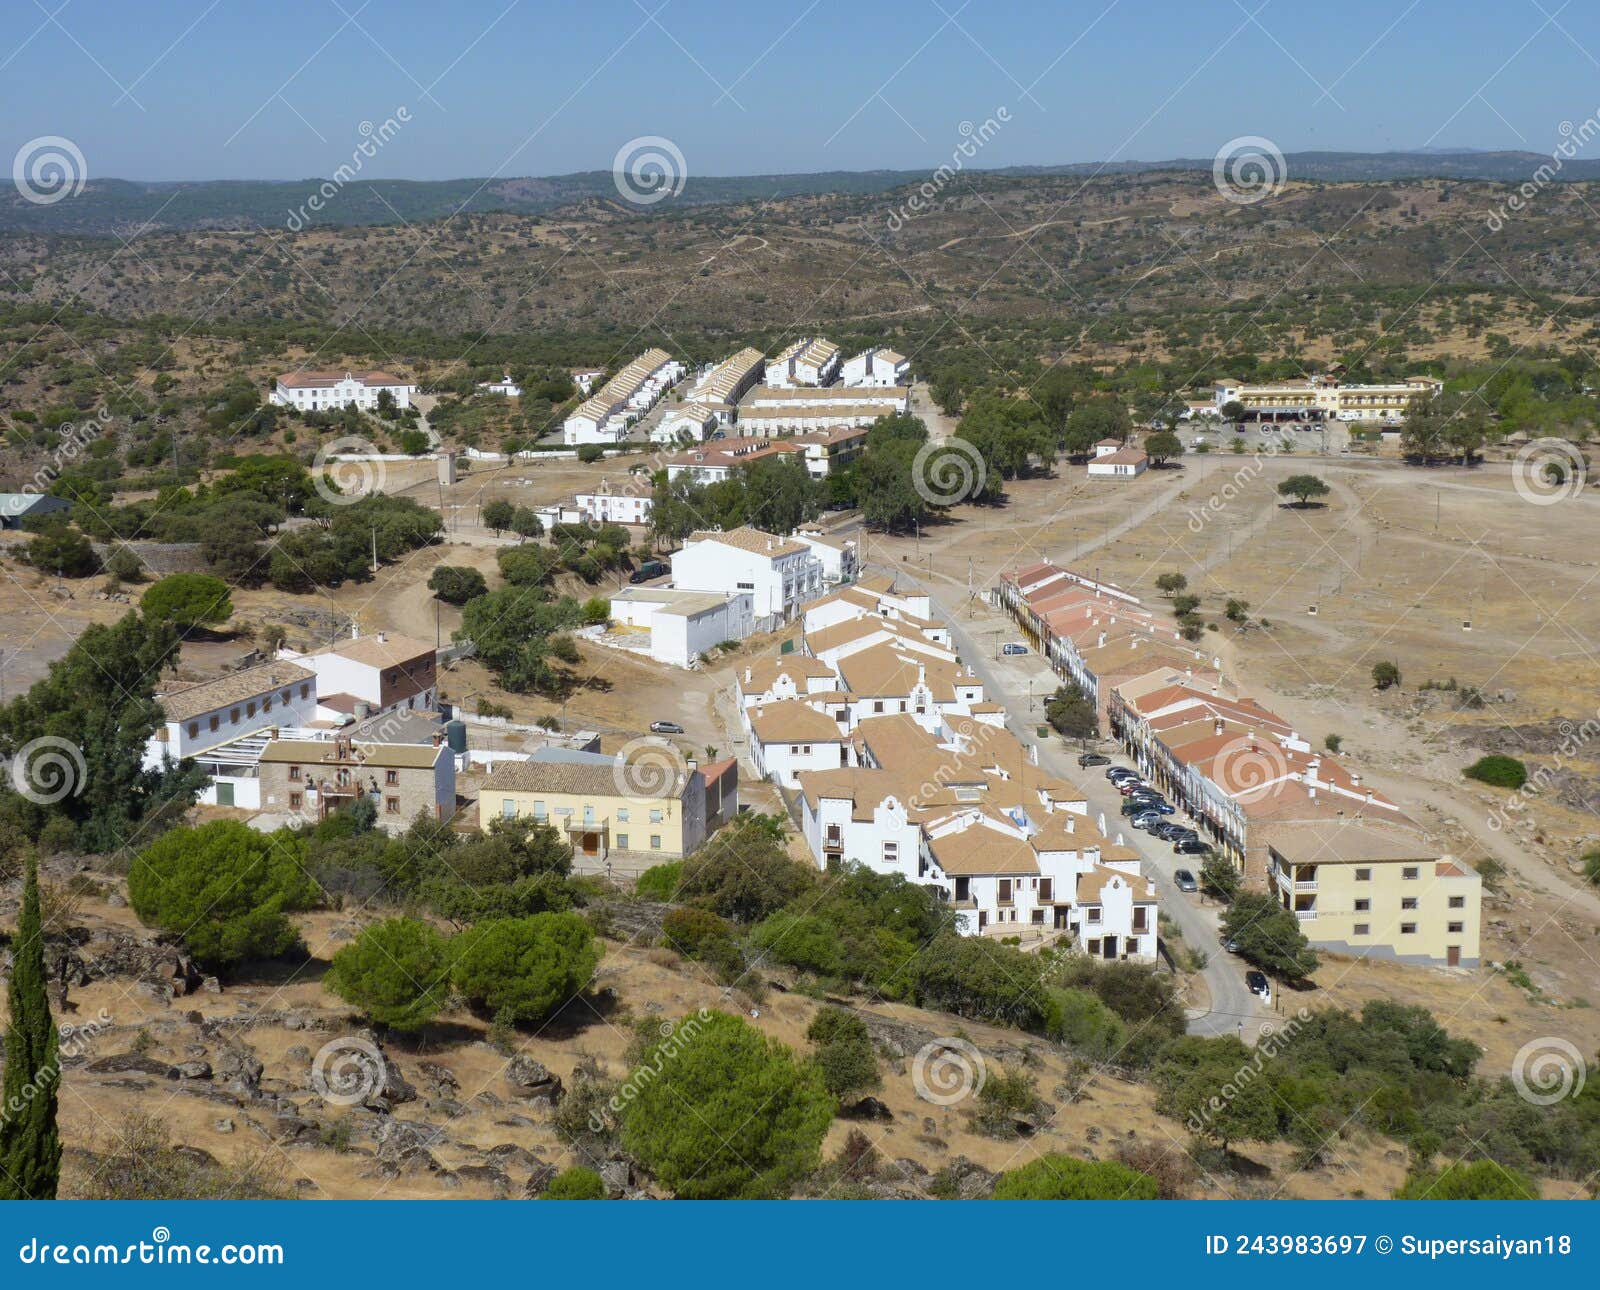 beautiful views of the sanctuary of the virgen de la cabeza in andÃÂºjar, andalusia